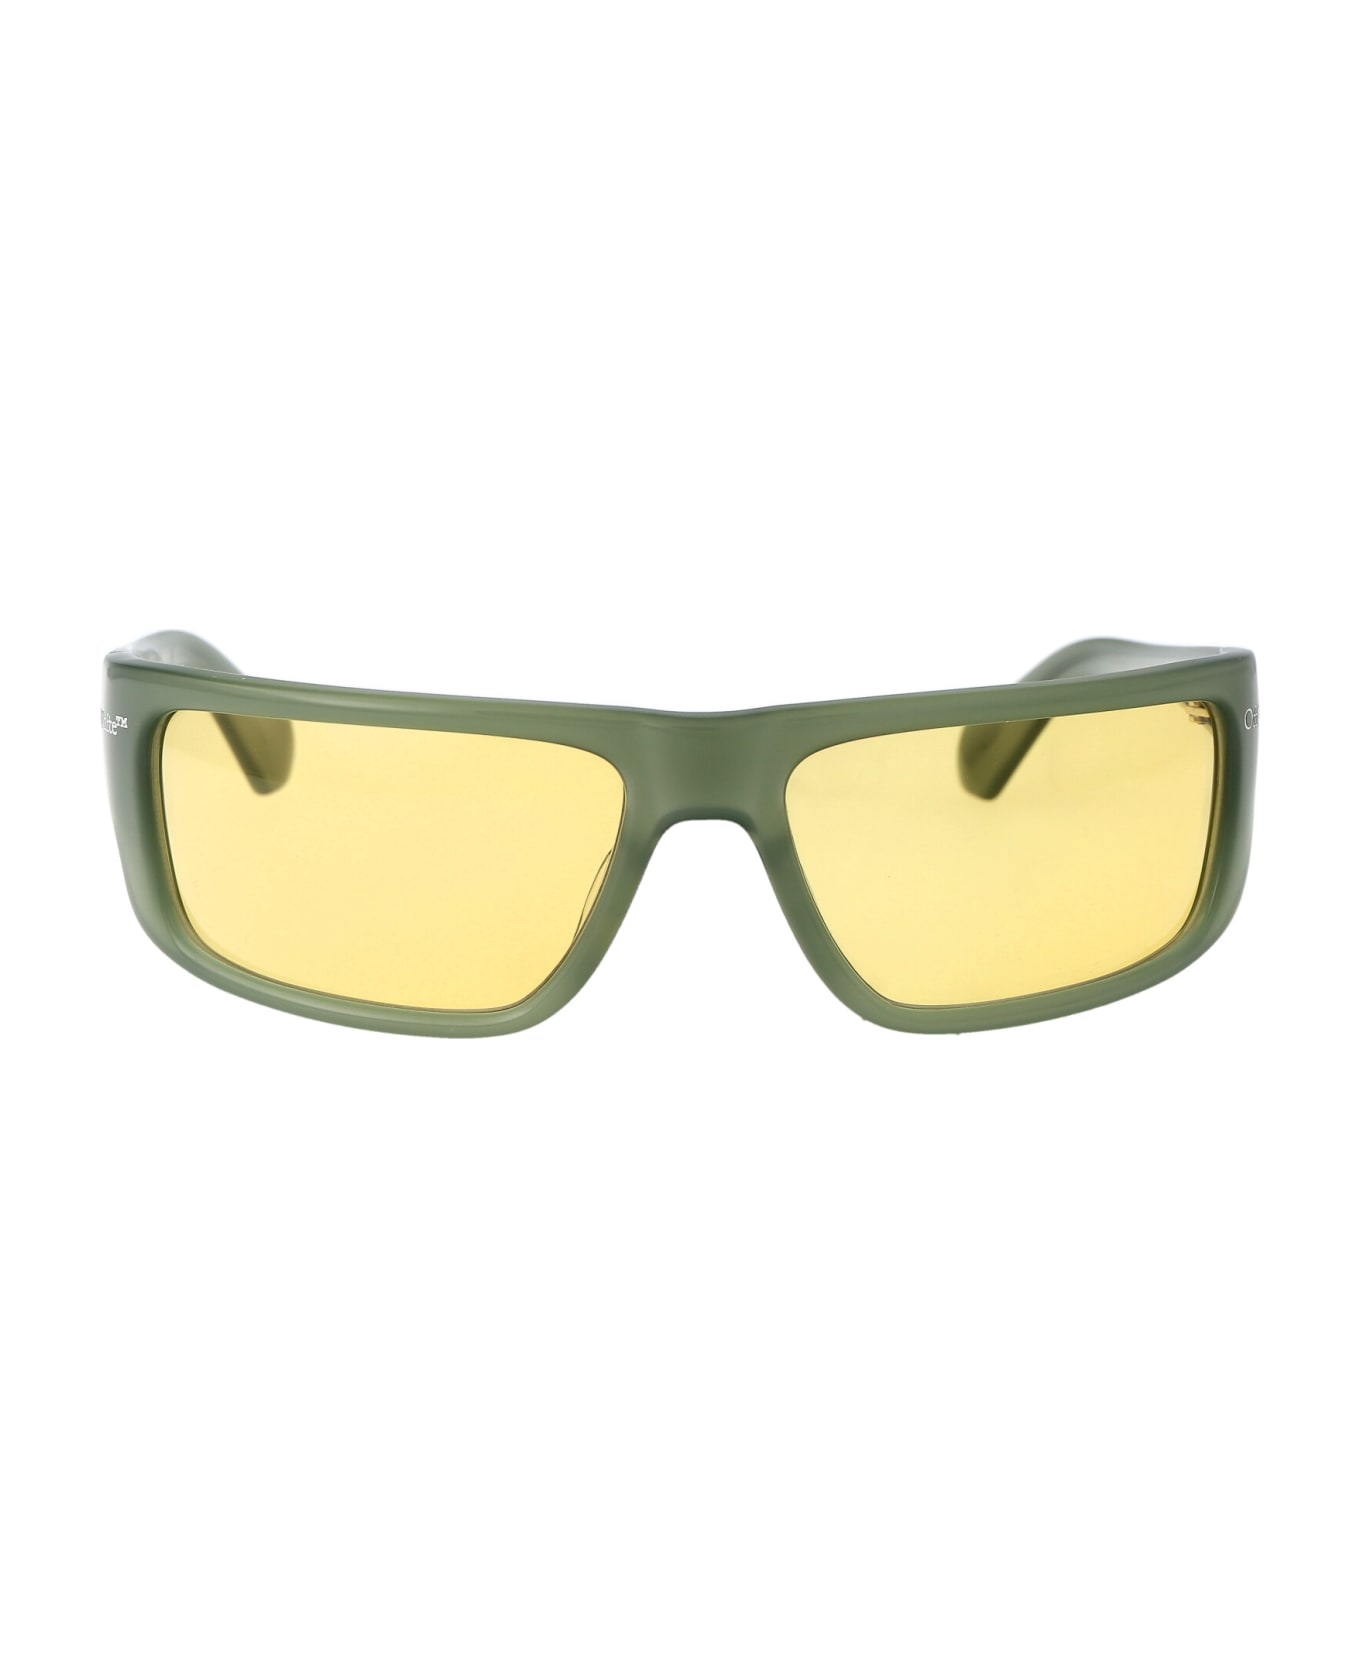 Off-White Bologna Sunglasses - 5518 SAGE GREEN サングラス